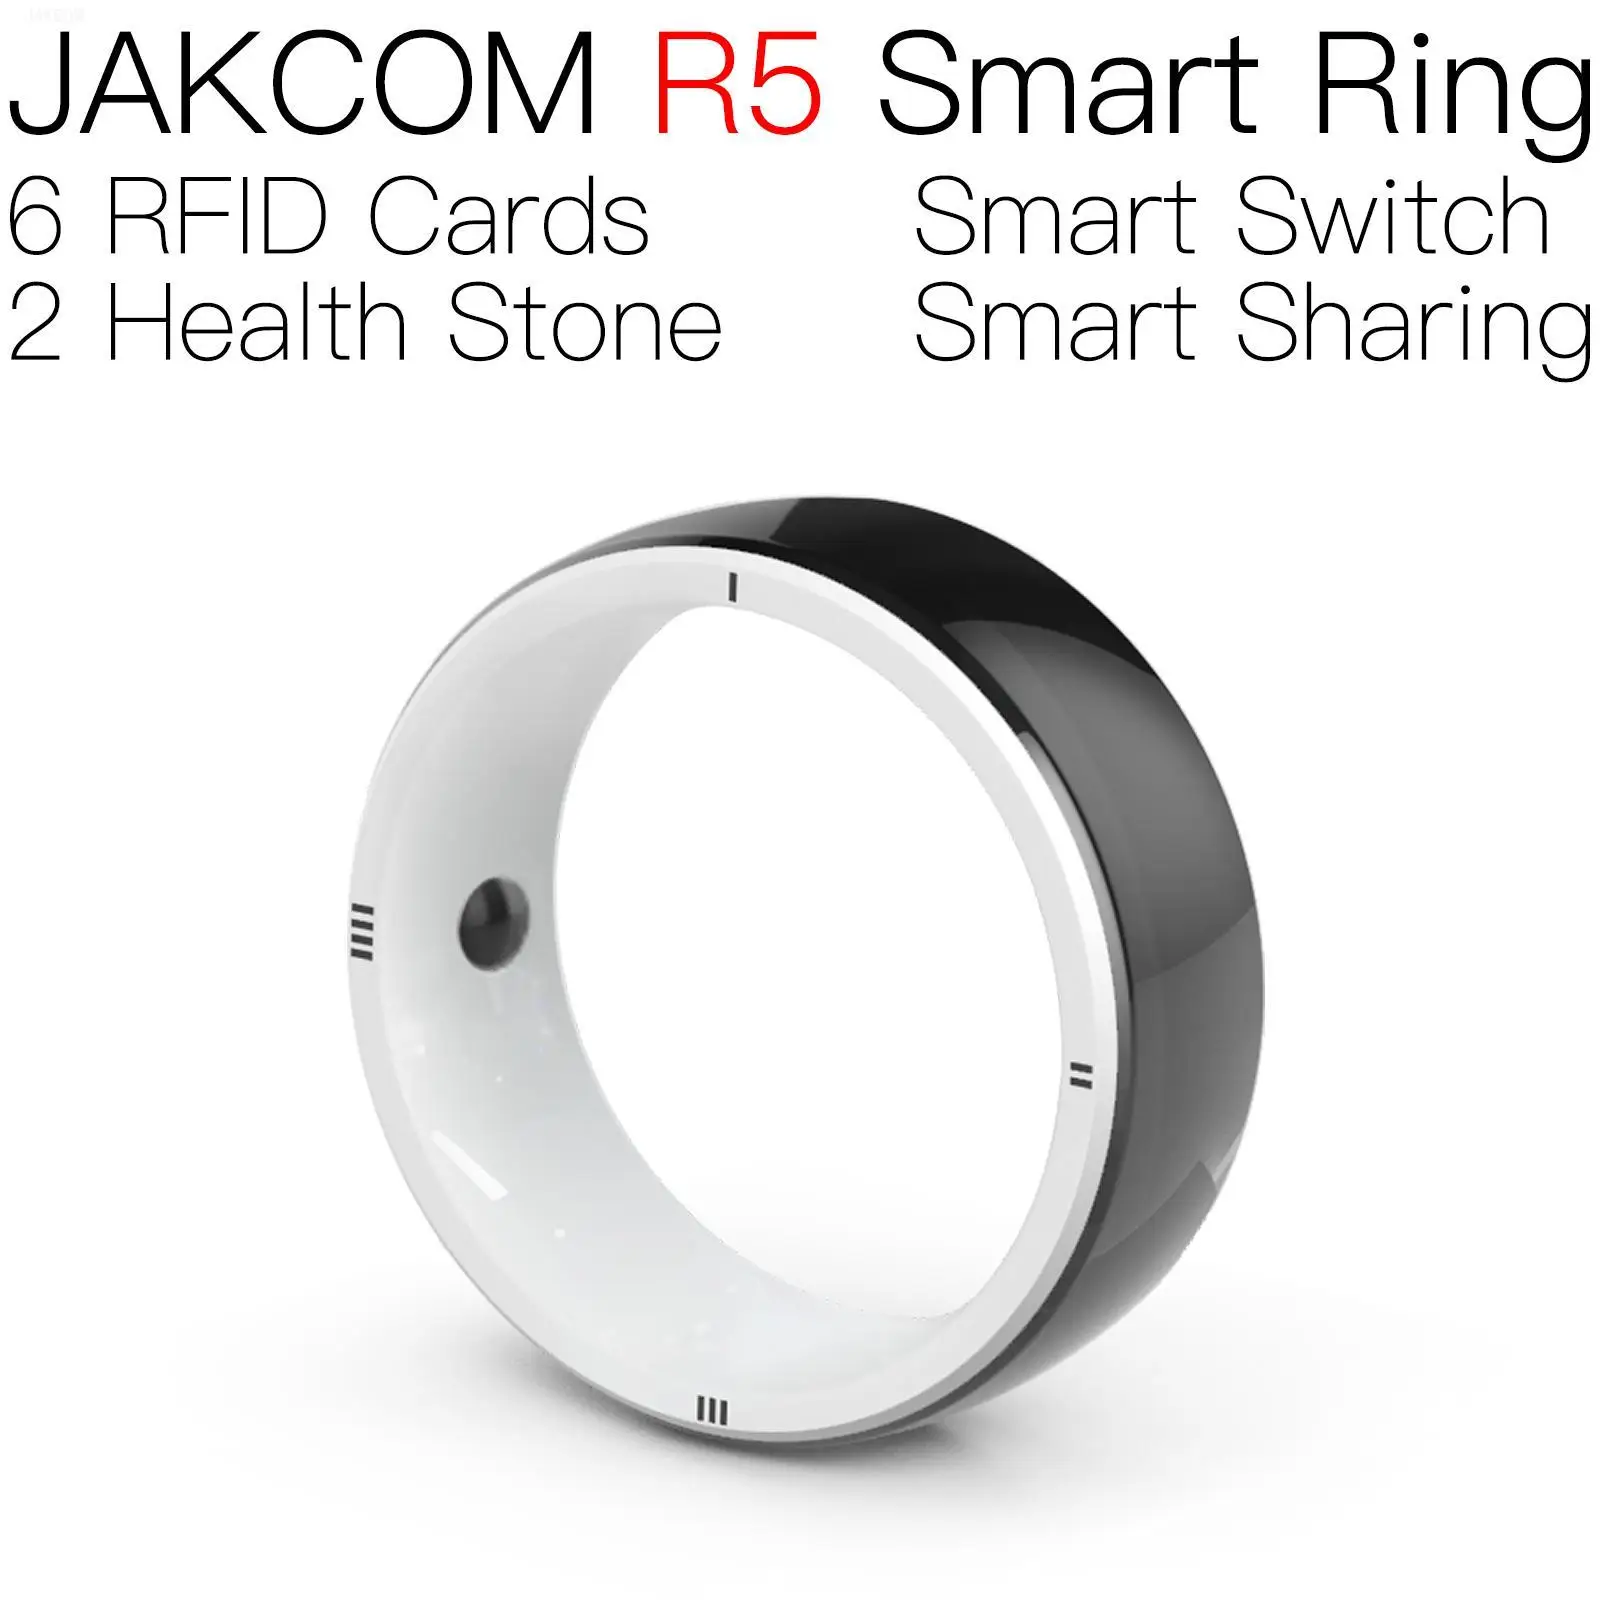 

JAKCOM R5 Smart Ring Super value than lomo card hameleon mini nfs trefoil solar panther x2 eu868 no roaming simbox blank cards